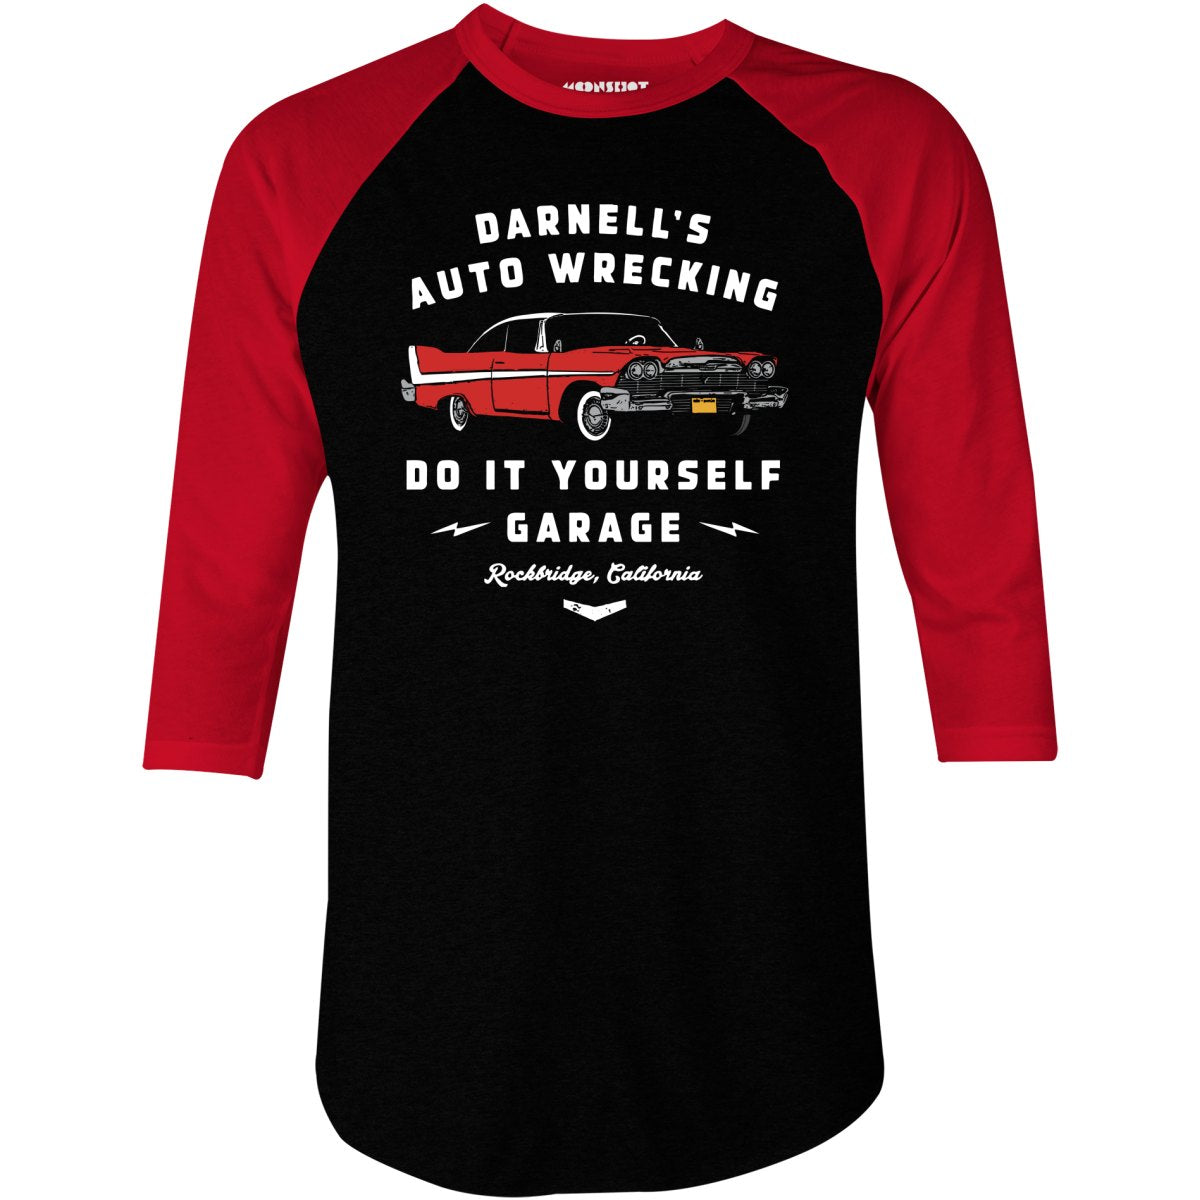 Darnell's Auto Wrecking - Do it Yourself Garage - 3/4 Sleeve Raglan T-Shirt